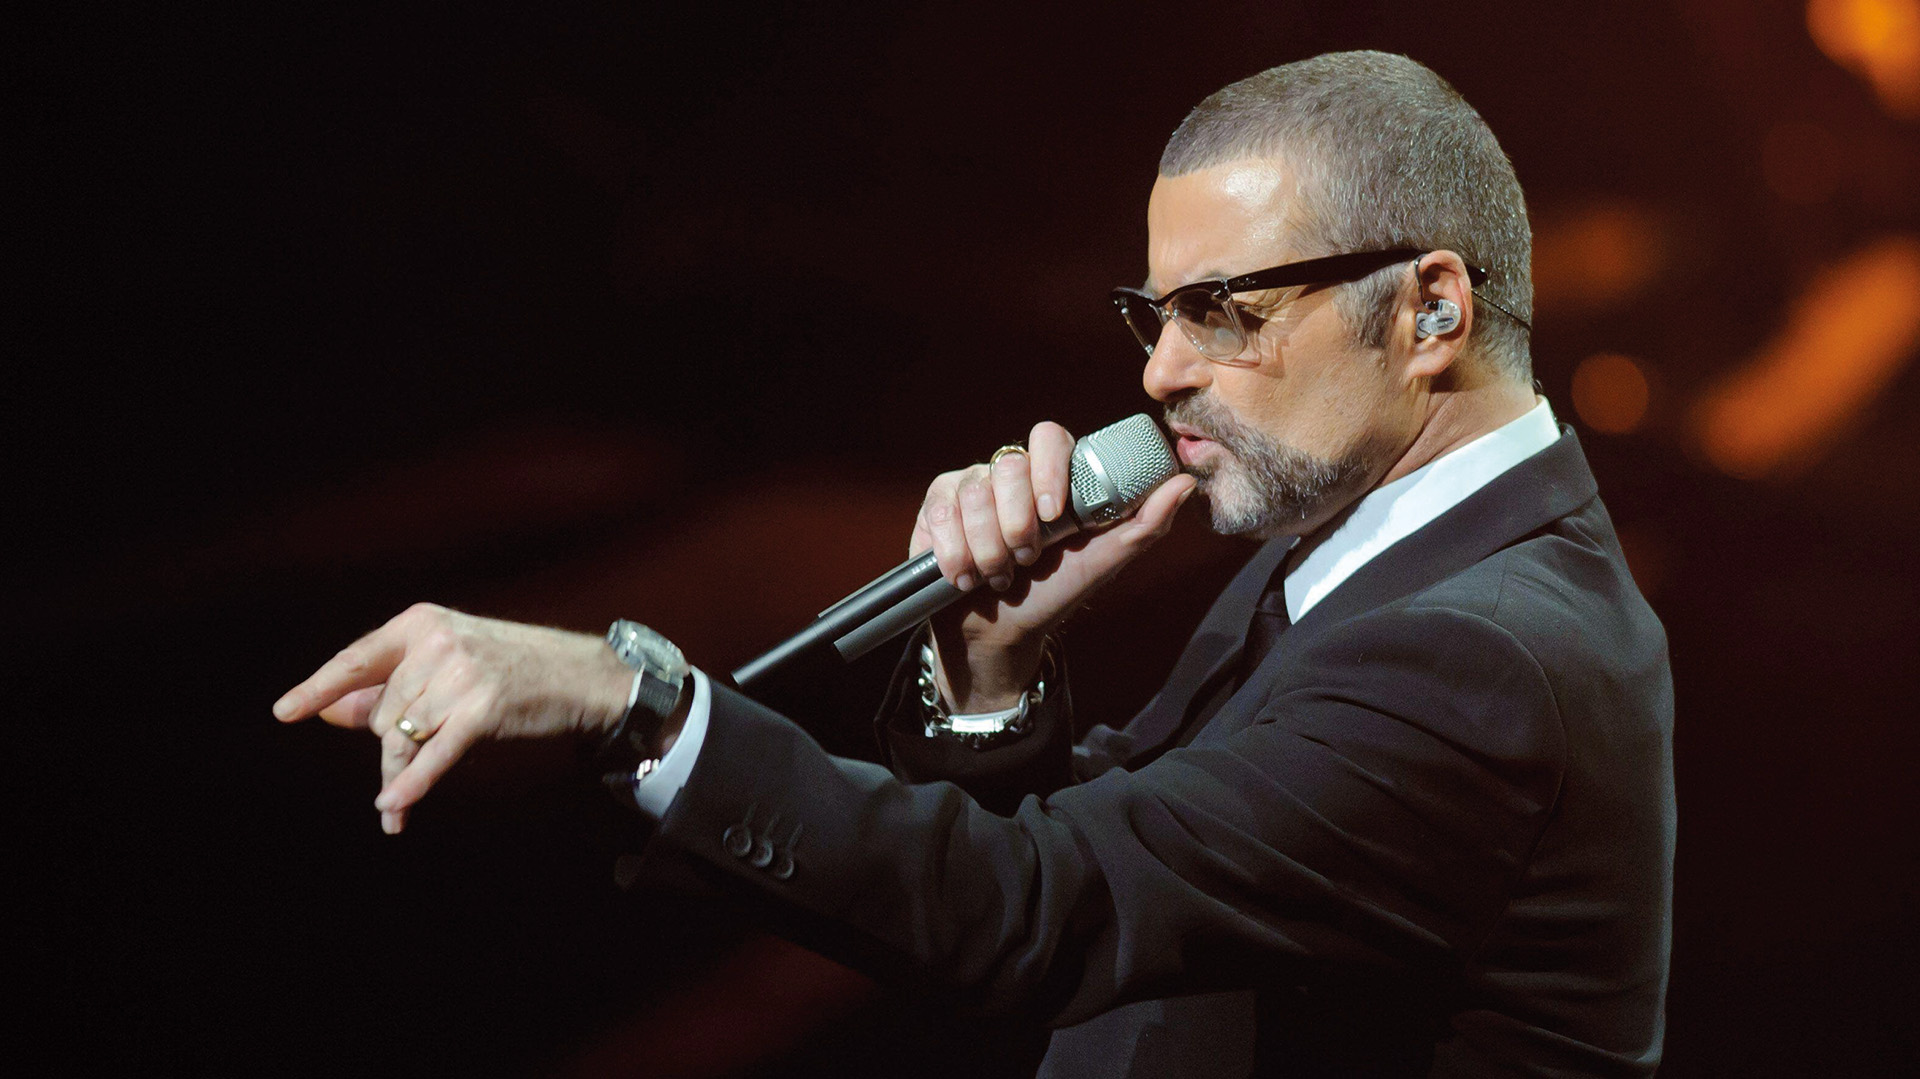 George Michael onstage in 2011